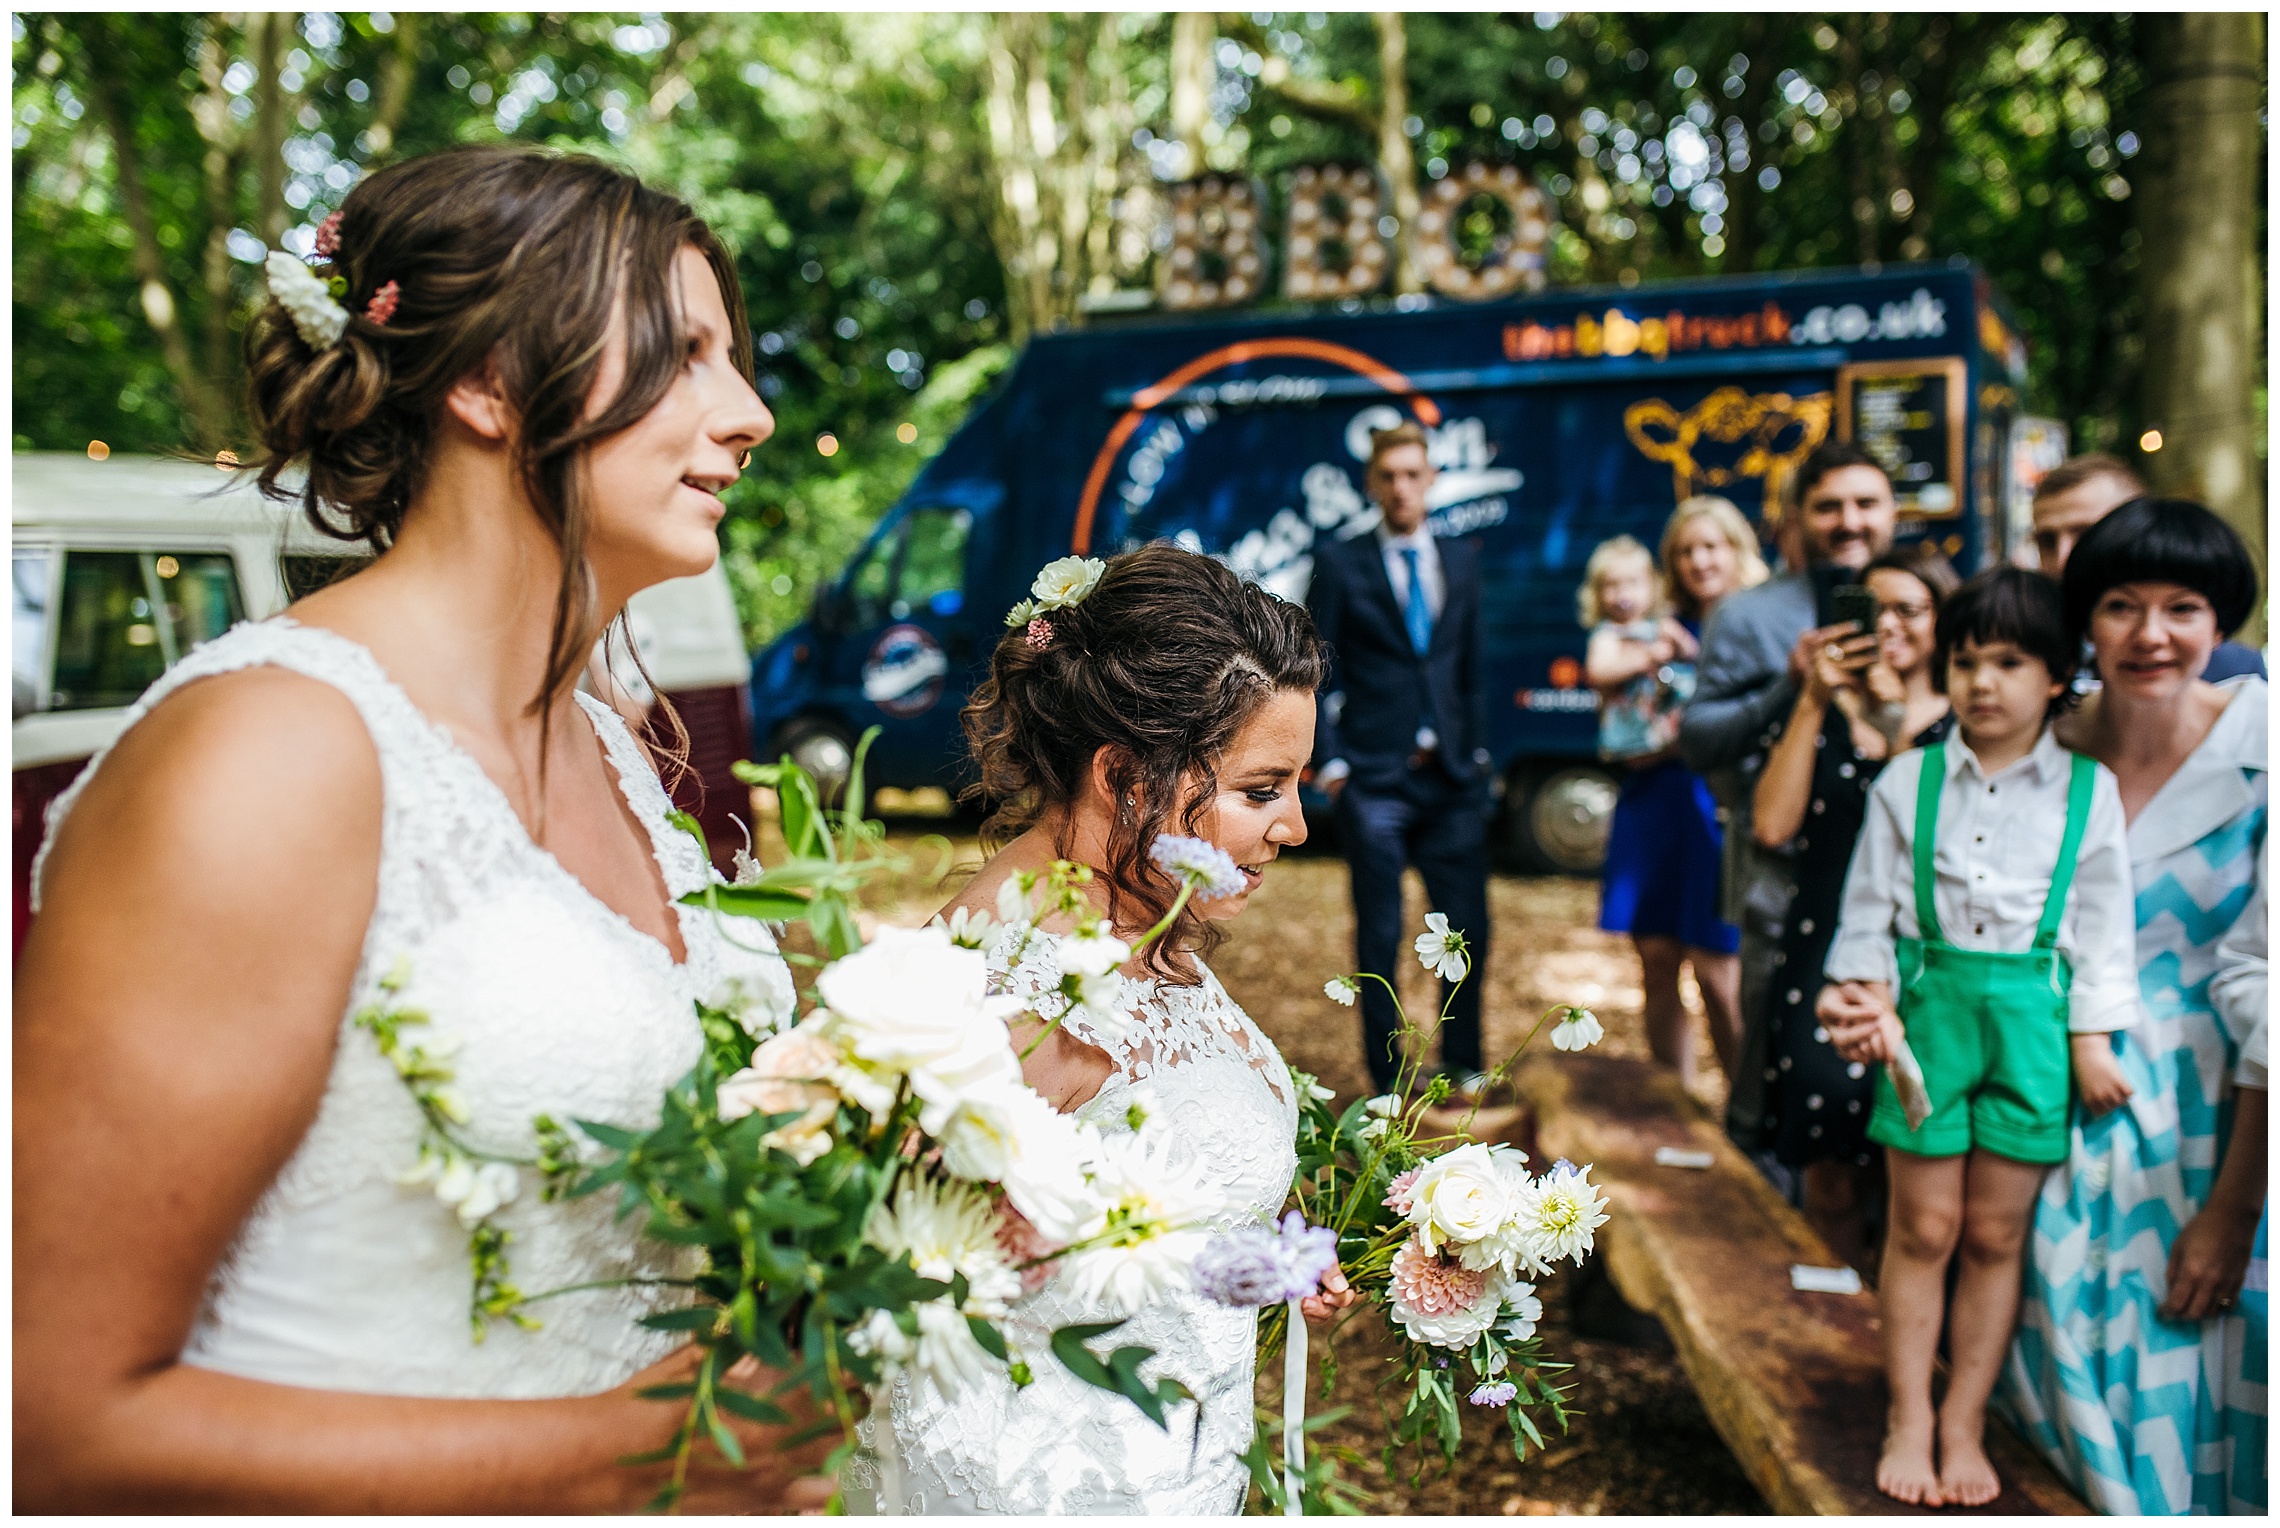 brides walk into wedding ceremony together at lilas wood